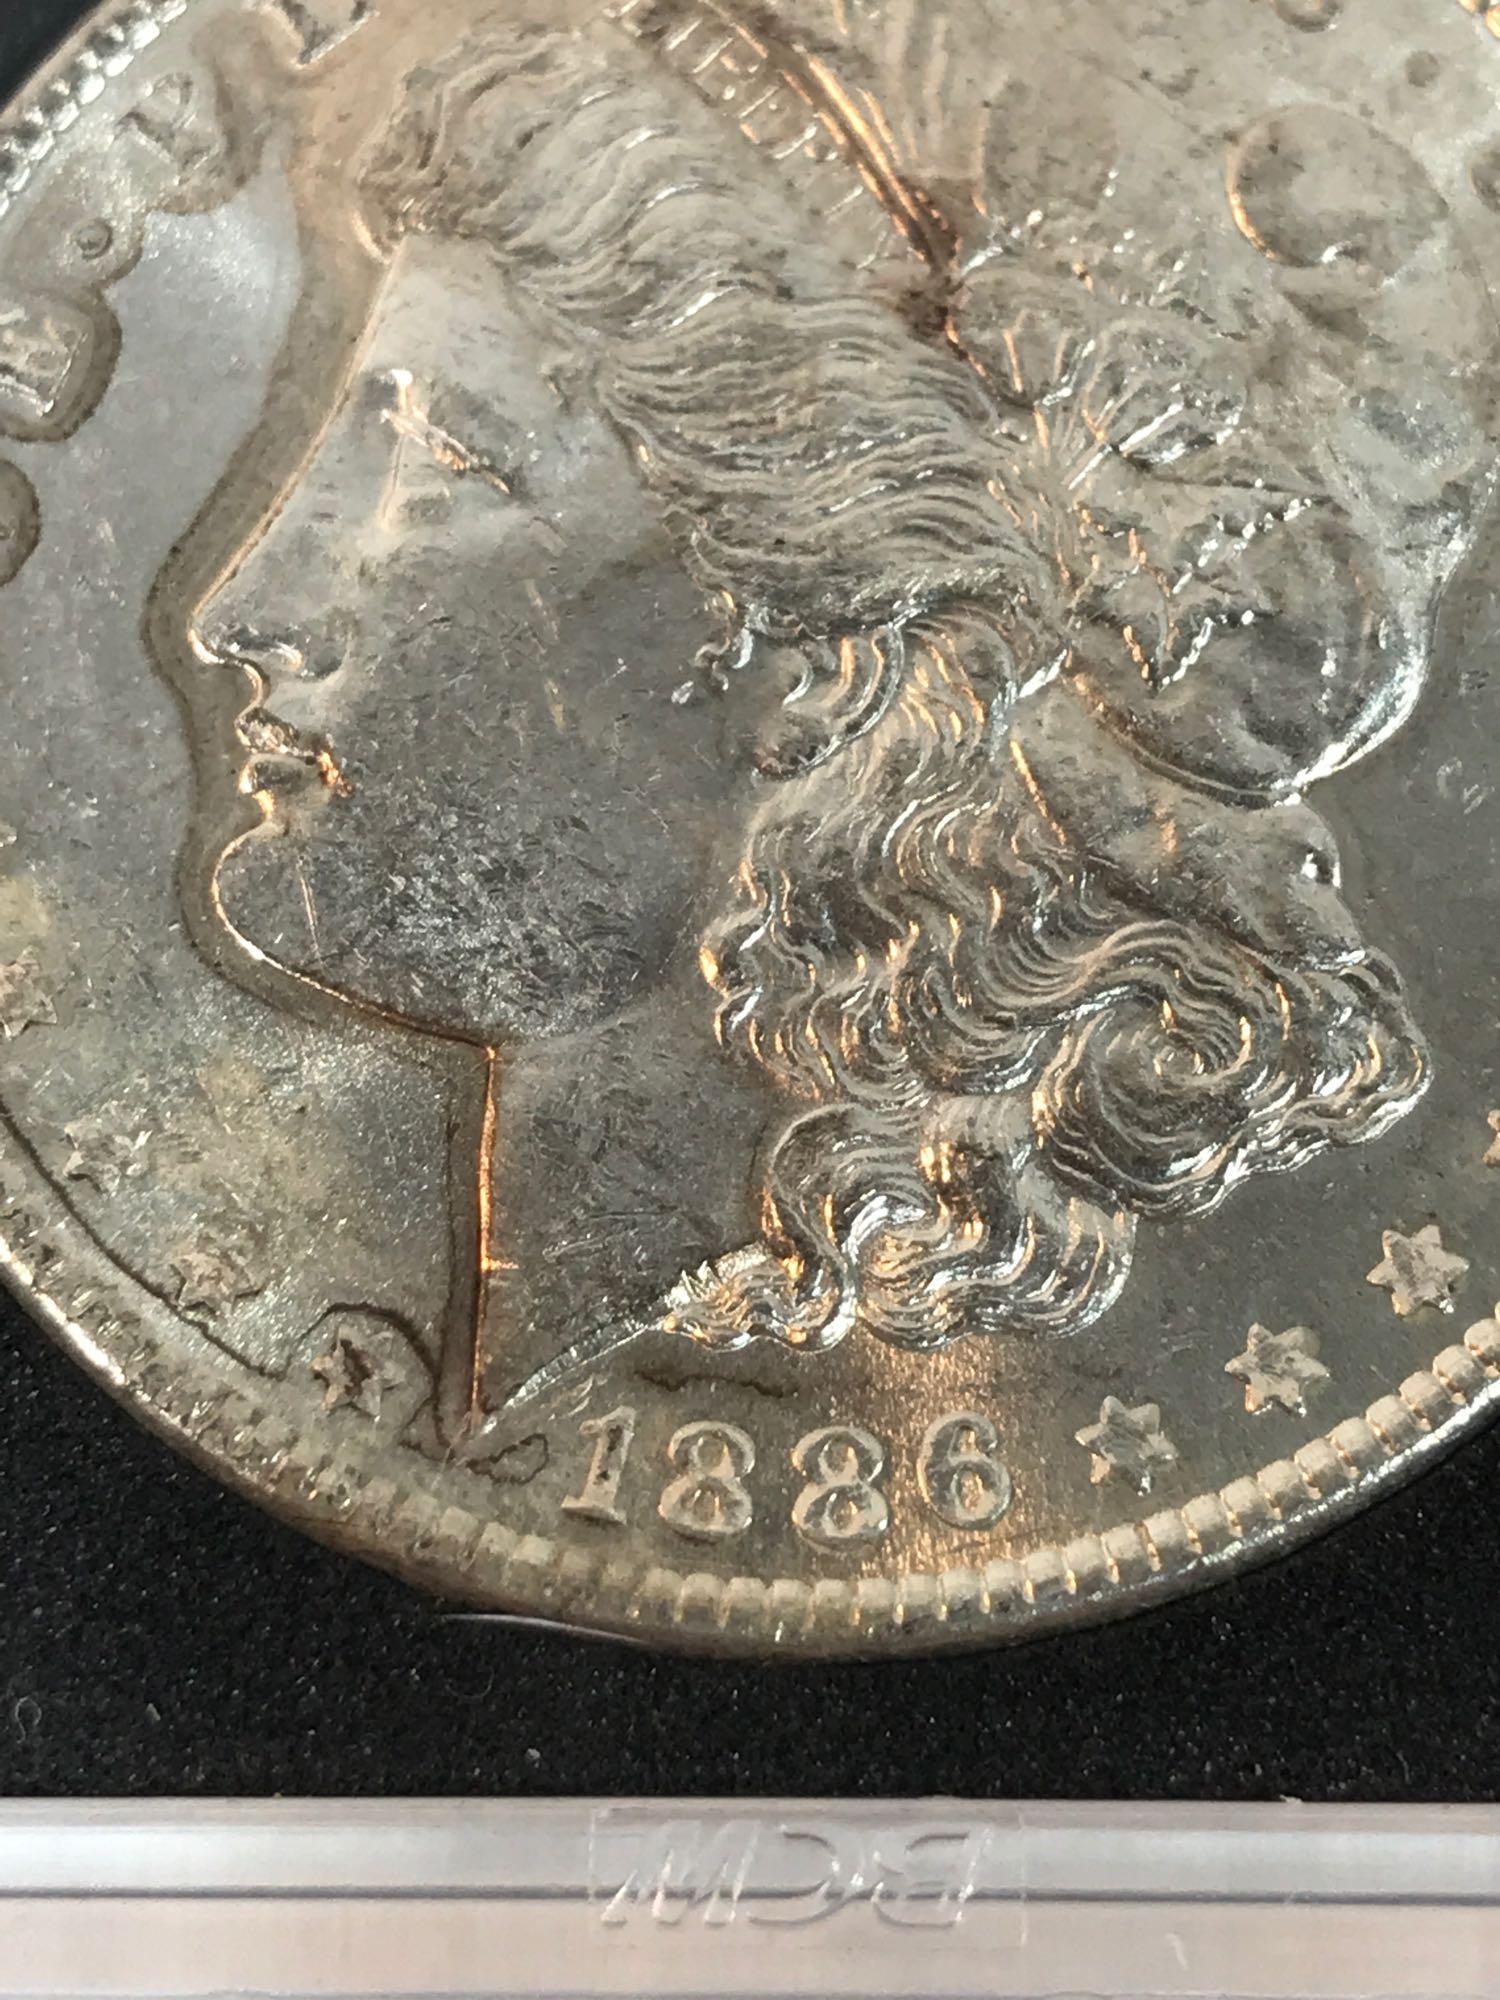 1881-S 1886 Morgan Silver Dollar 2 Units